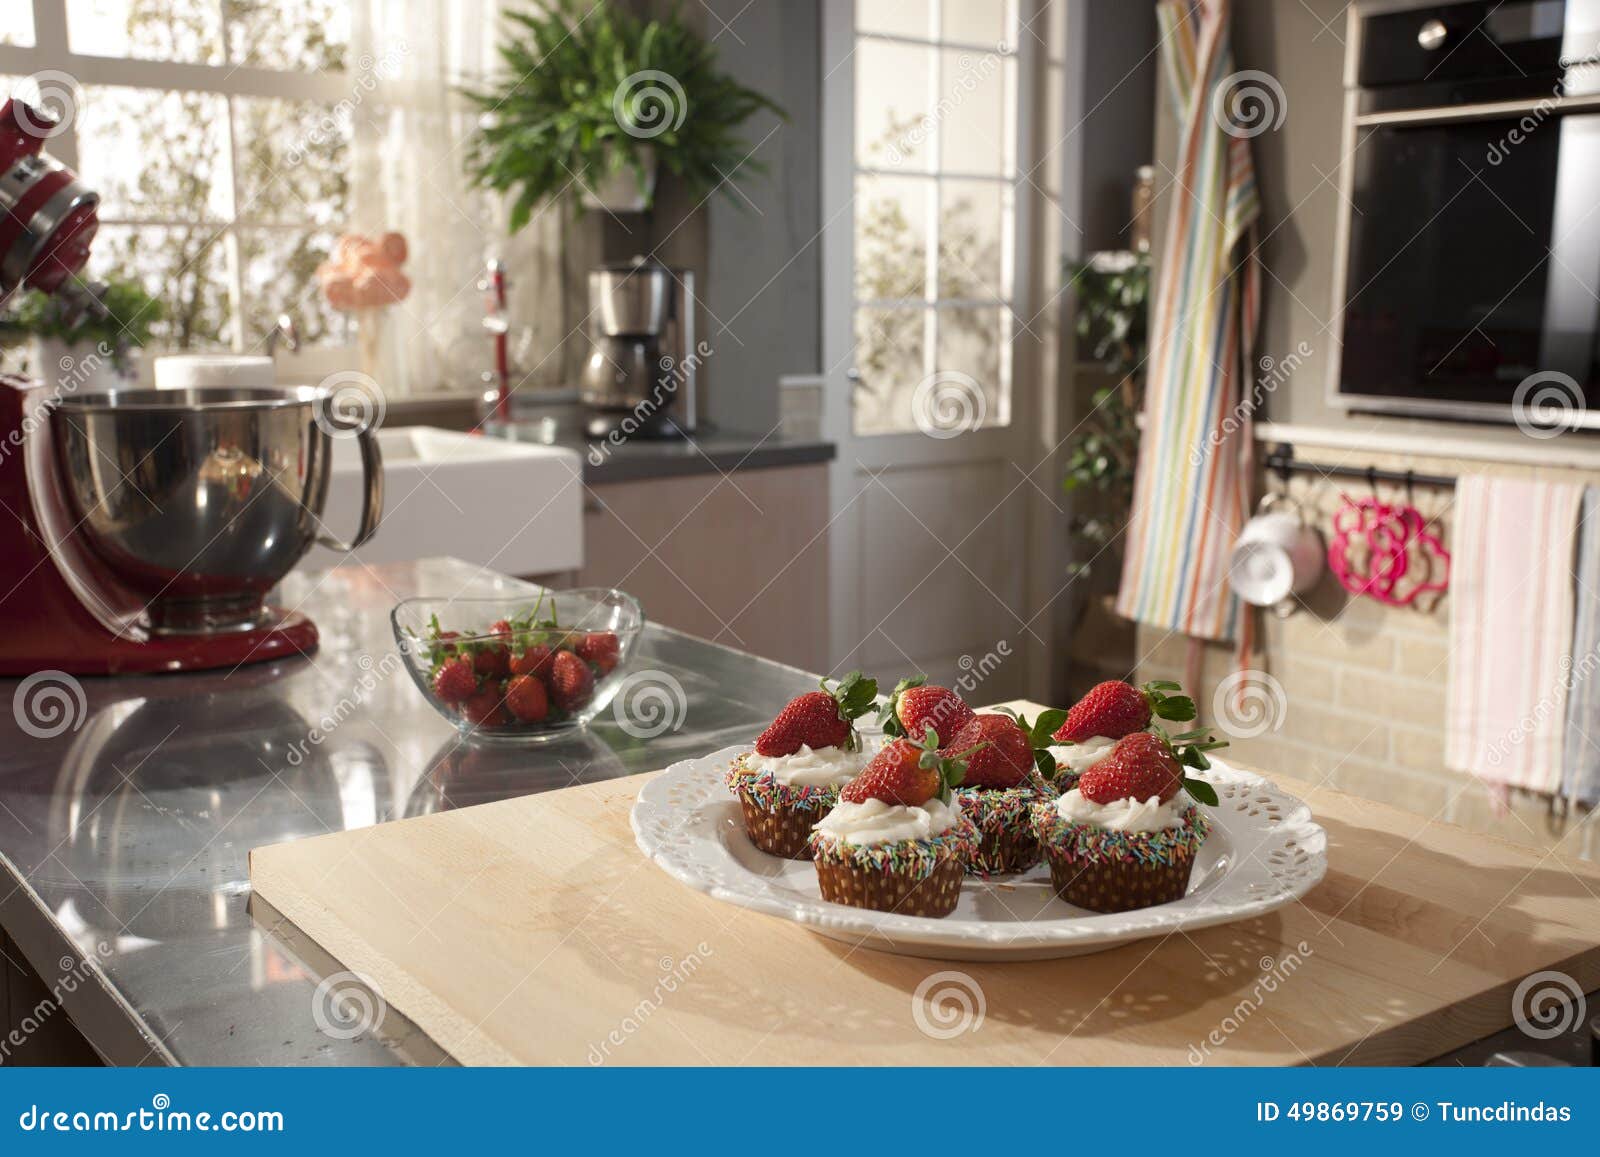 Kitchen 4 Stock Image Image Of Light House Strawberry 49869759 